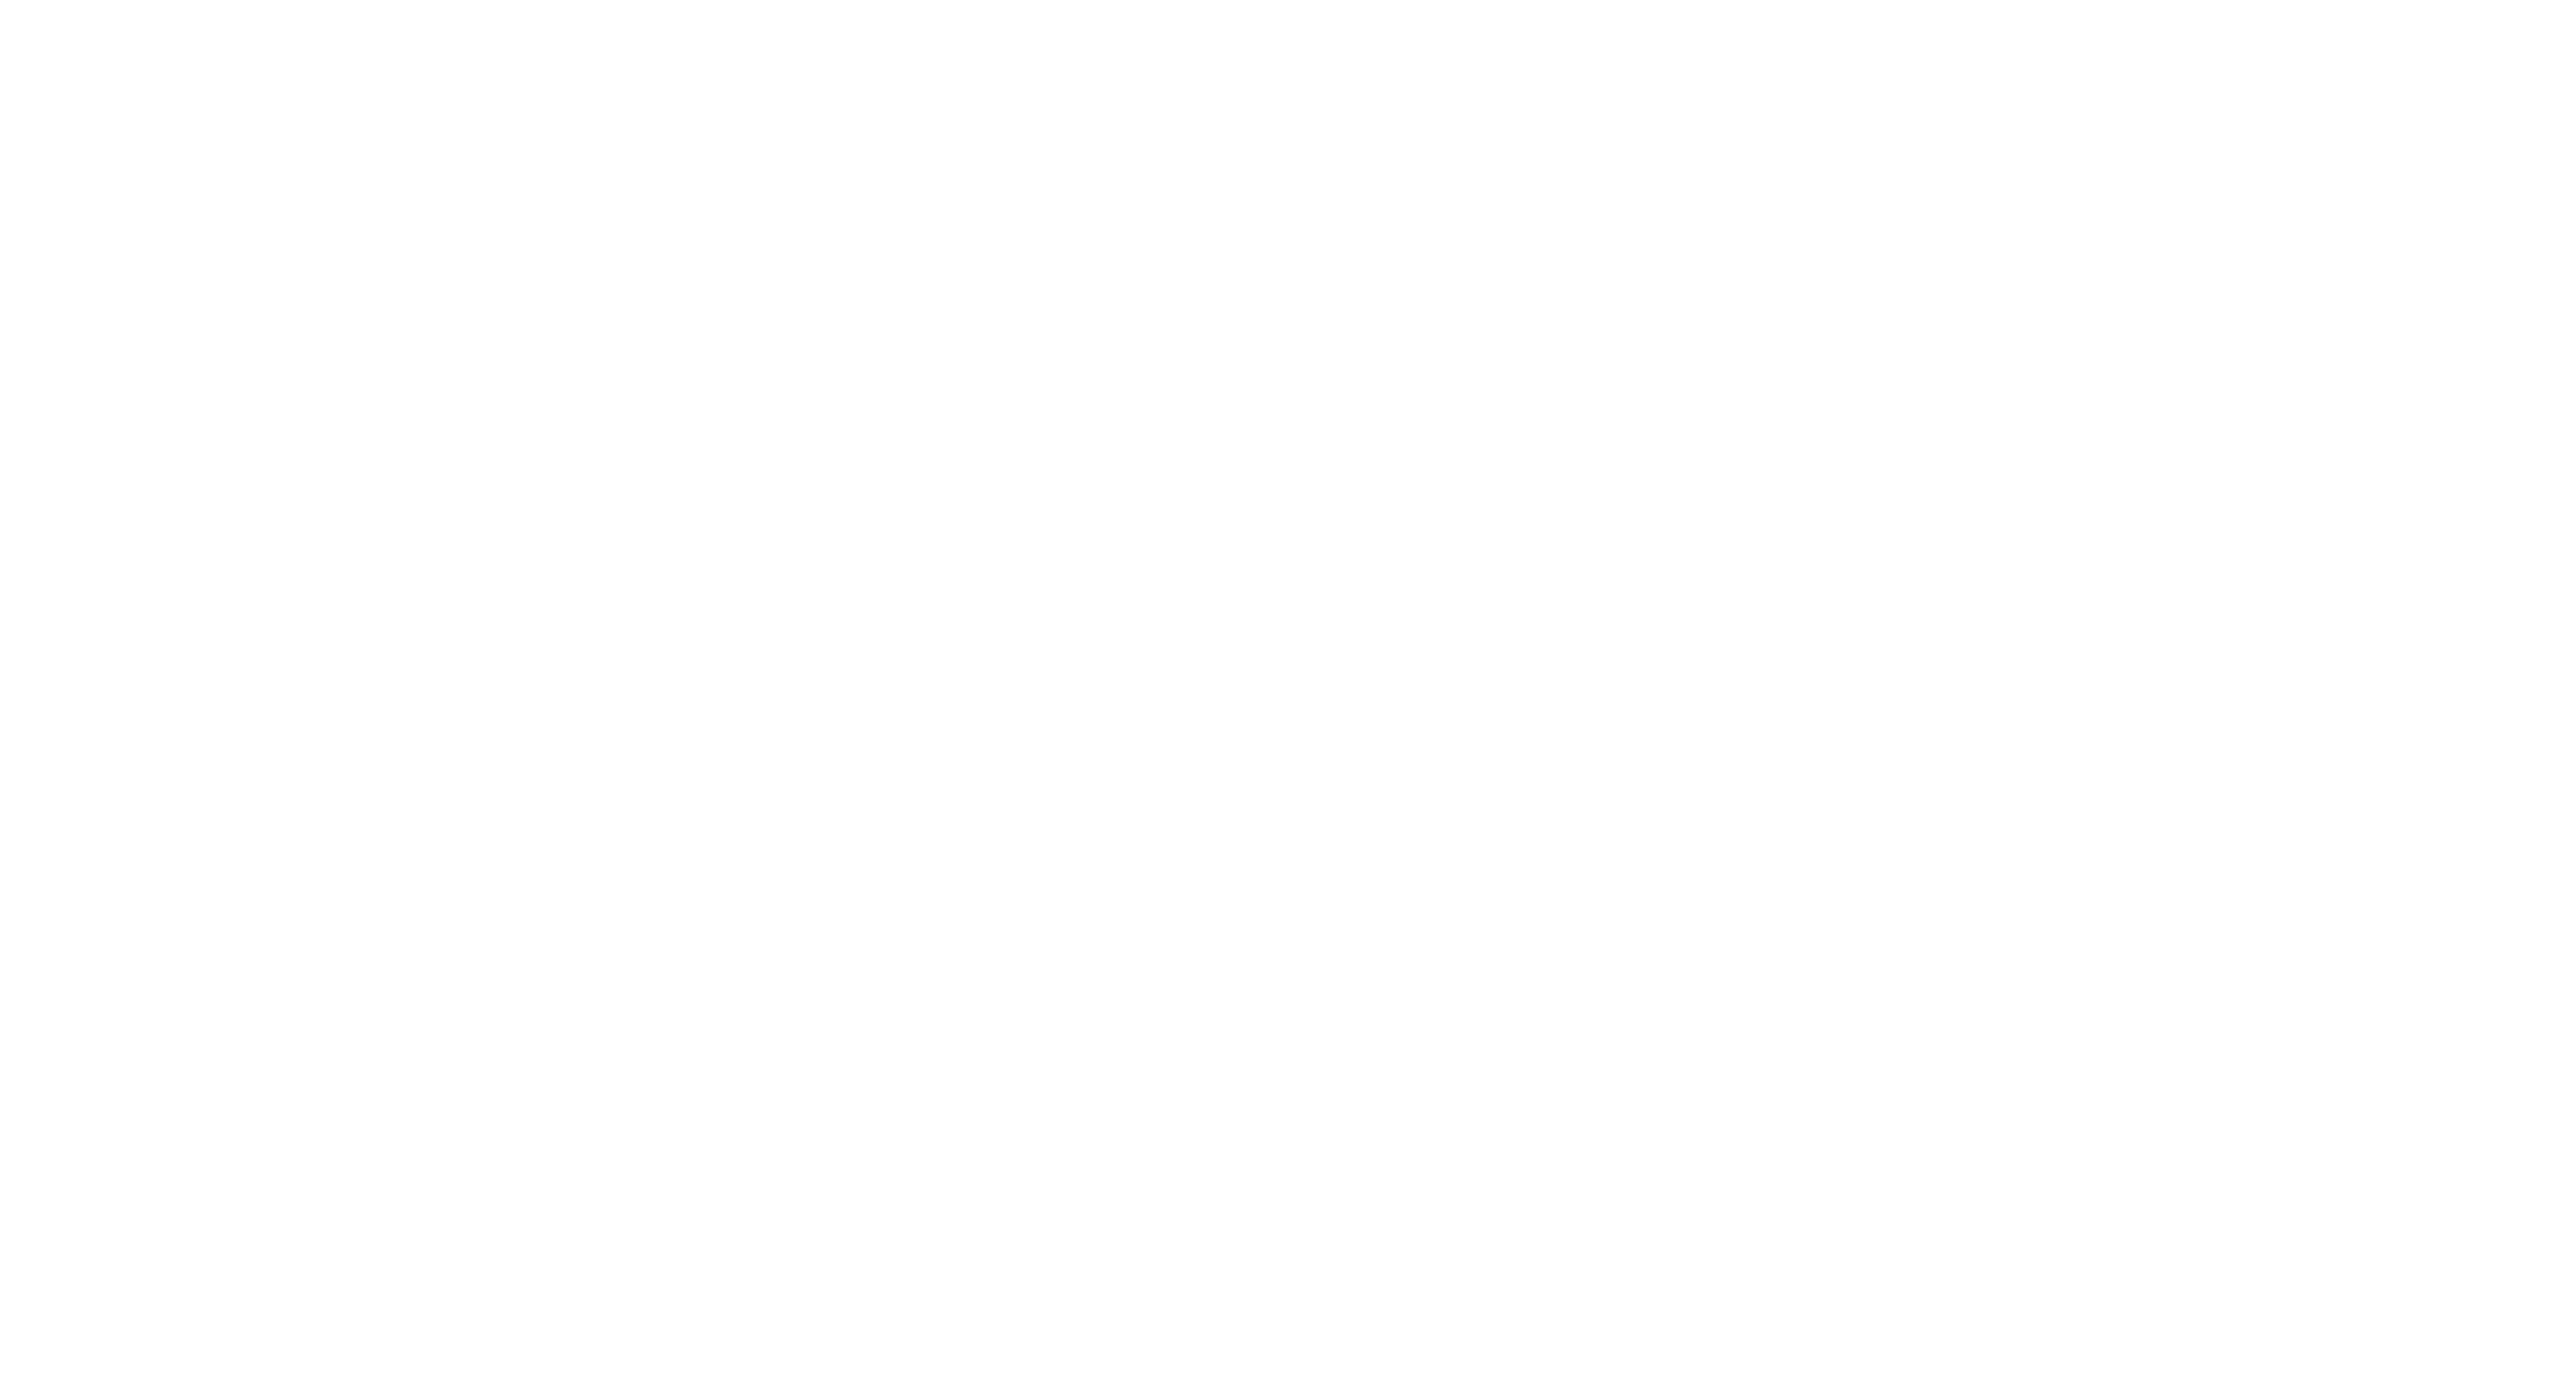 Croft Insurance Services, Inc